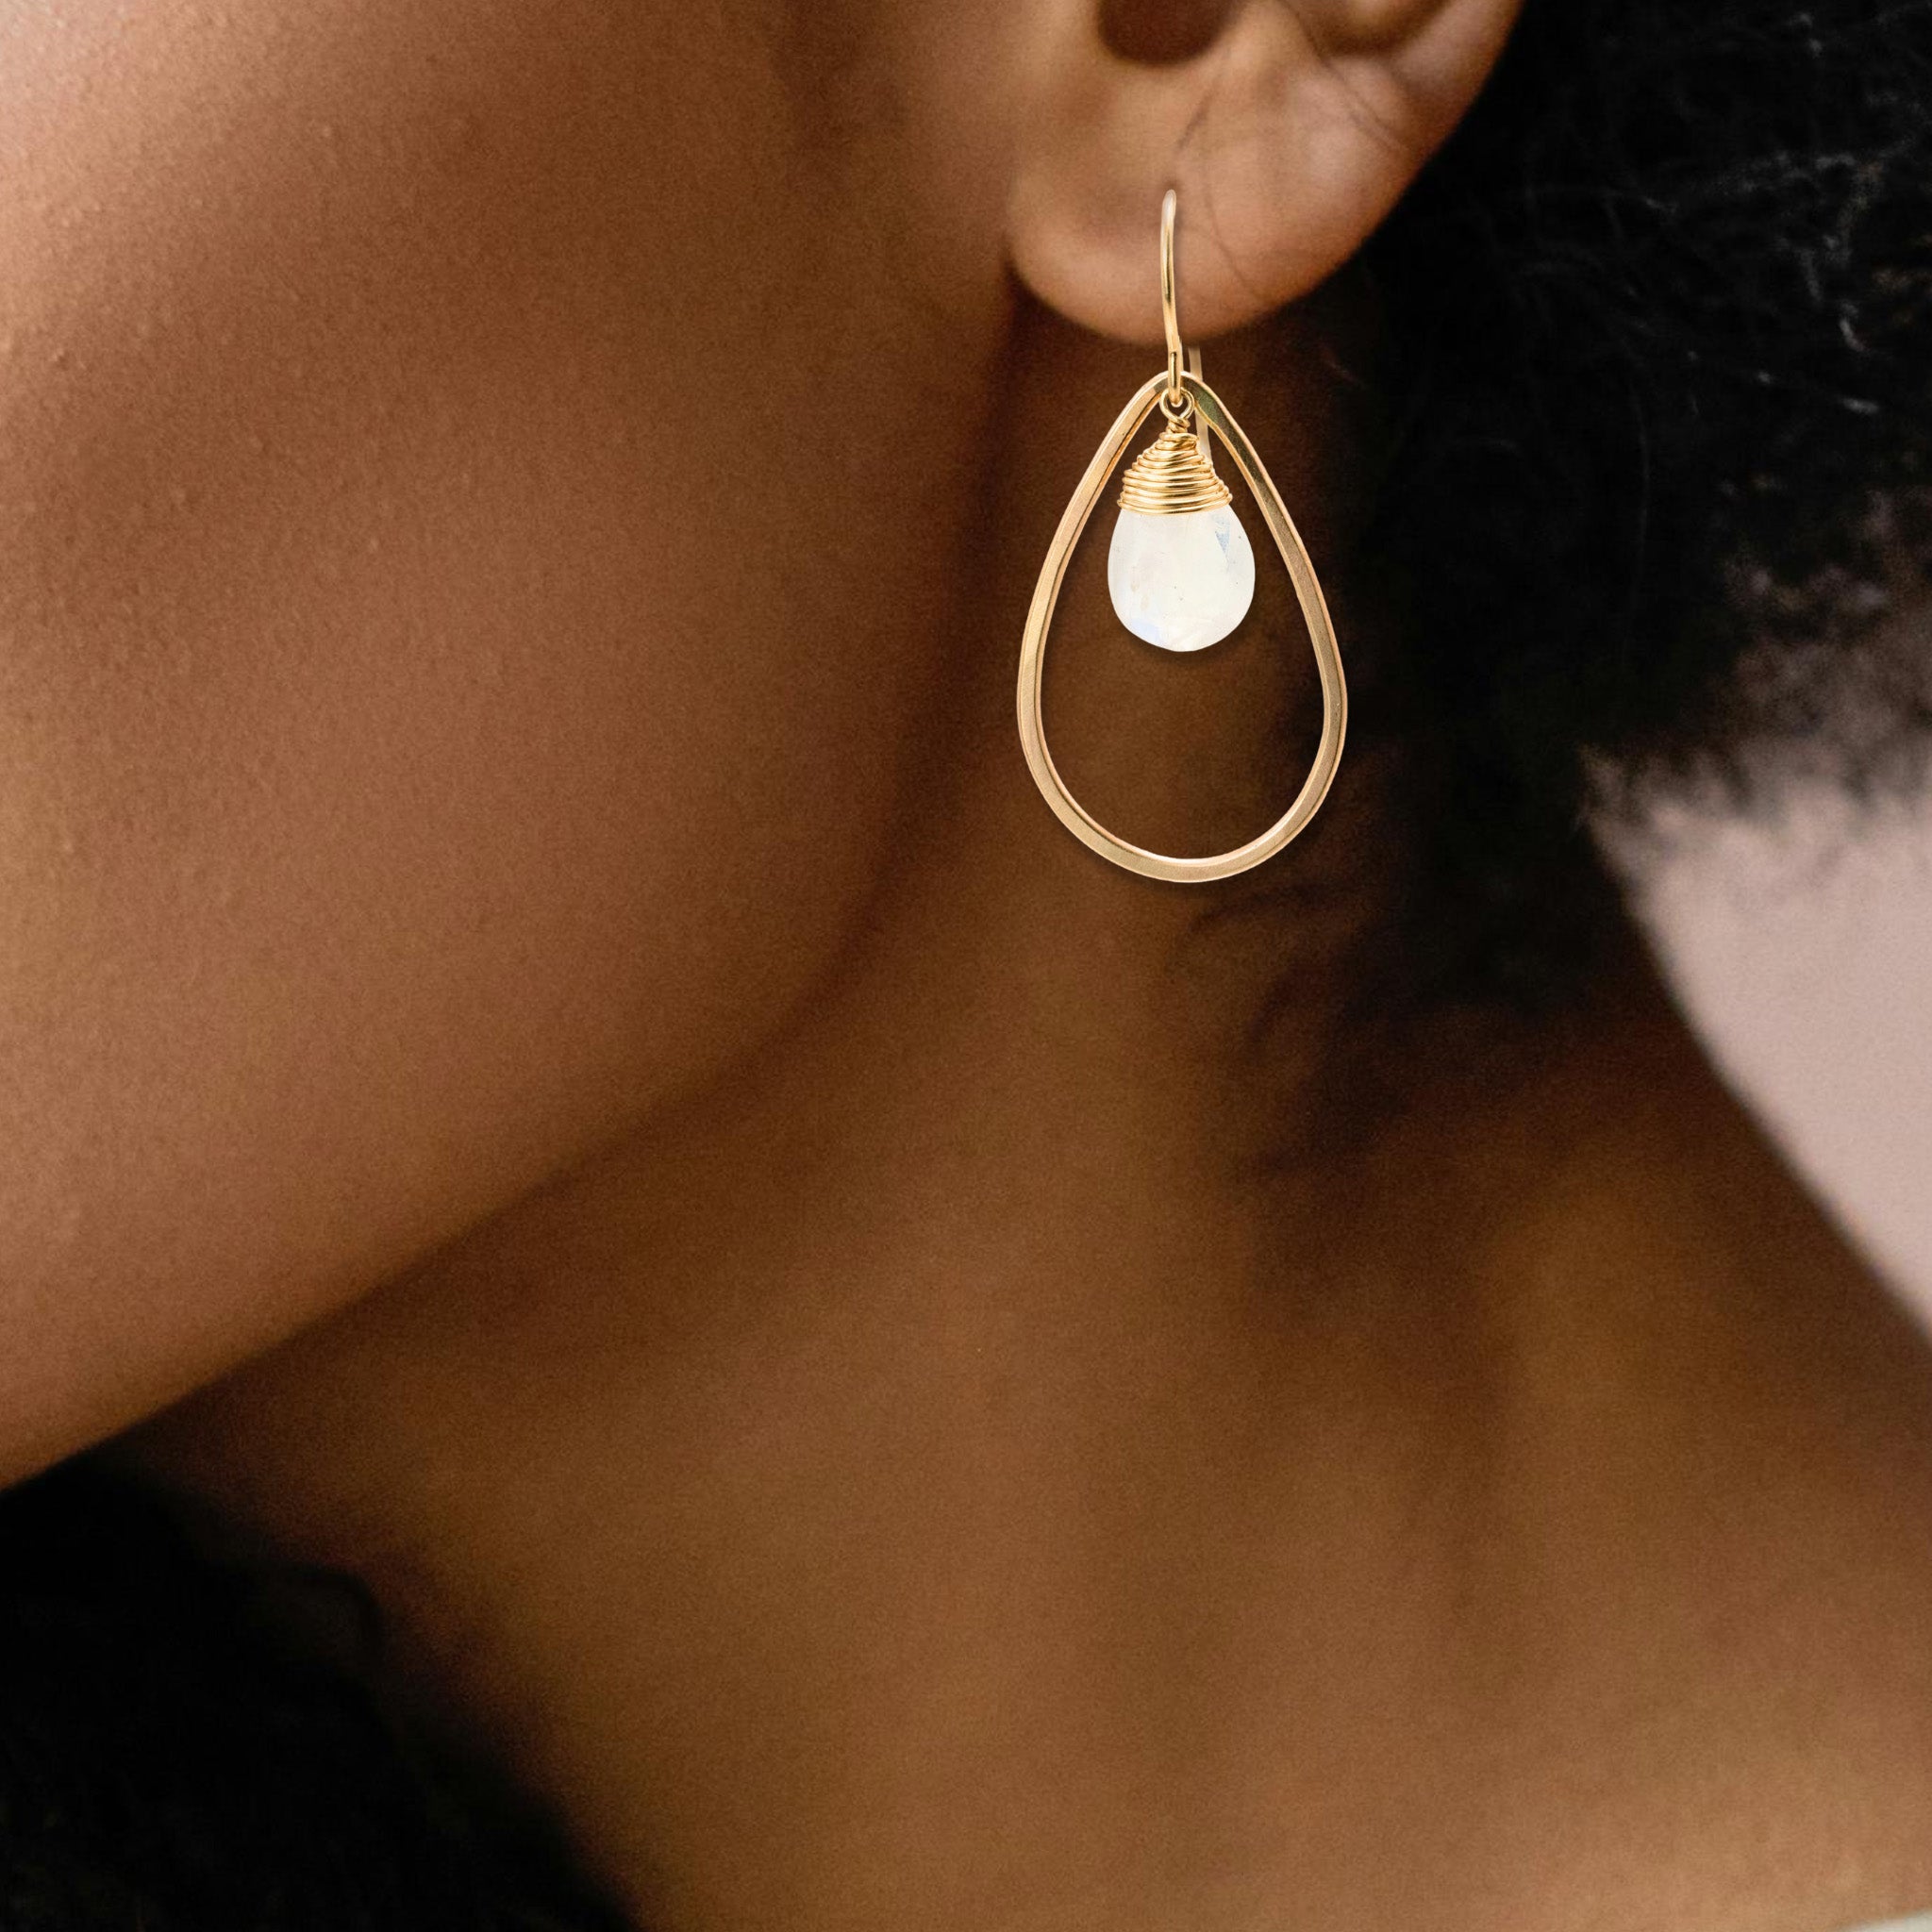 Faceted Moonstone Earring - Earrings